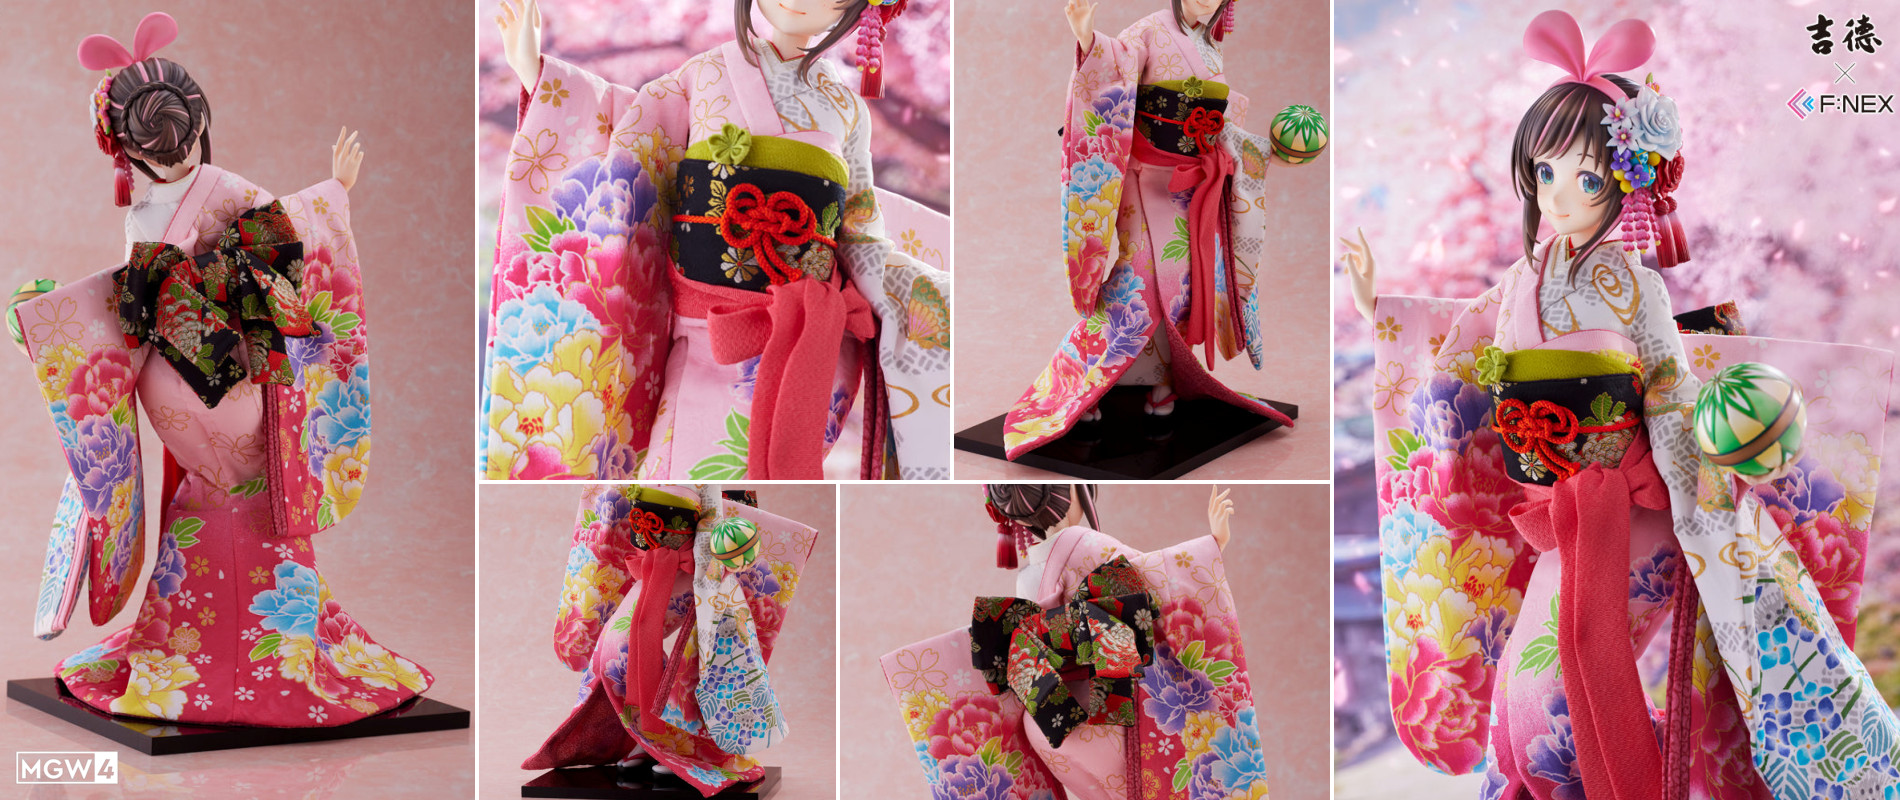 Yoshitoku FNEX Kizuna AI Japanese Doll MyGrailWatch Anime Figure Guide